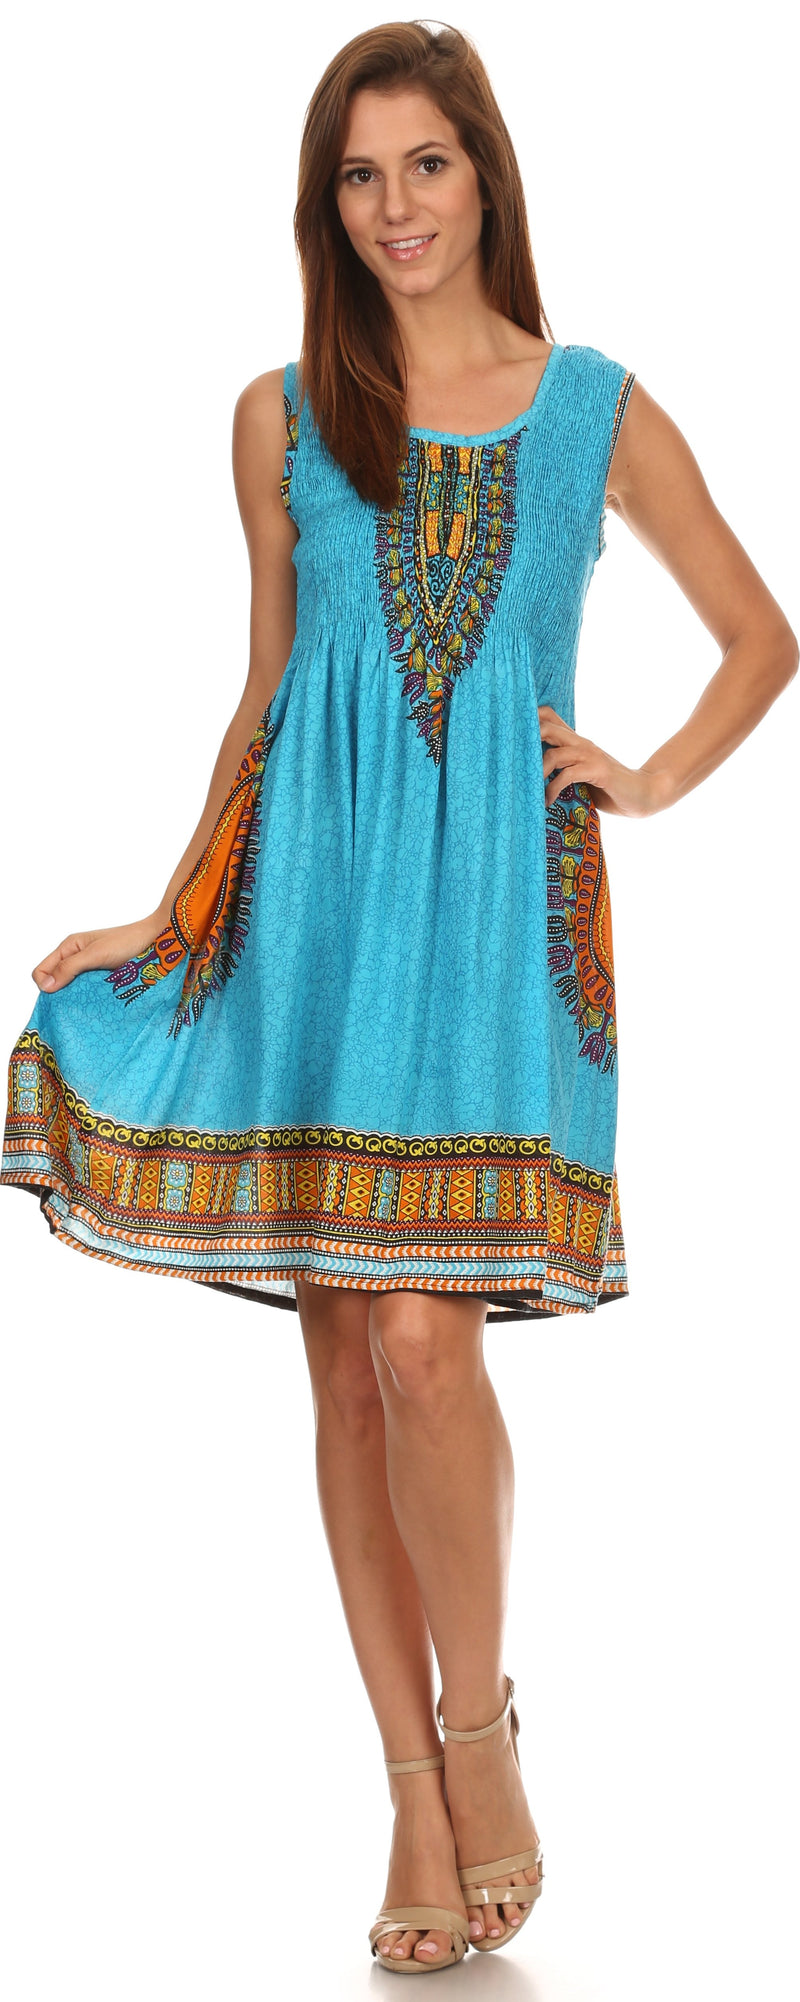 Sakkas Zulla Mid-Length Adjustable Tribal Floral Aztec Batik Tank Top Dress